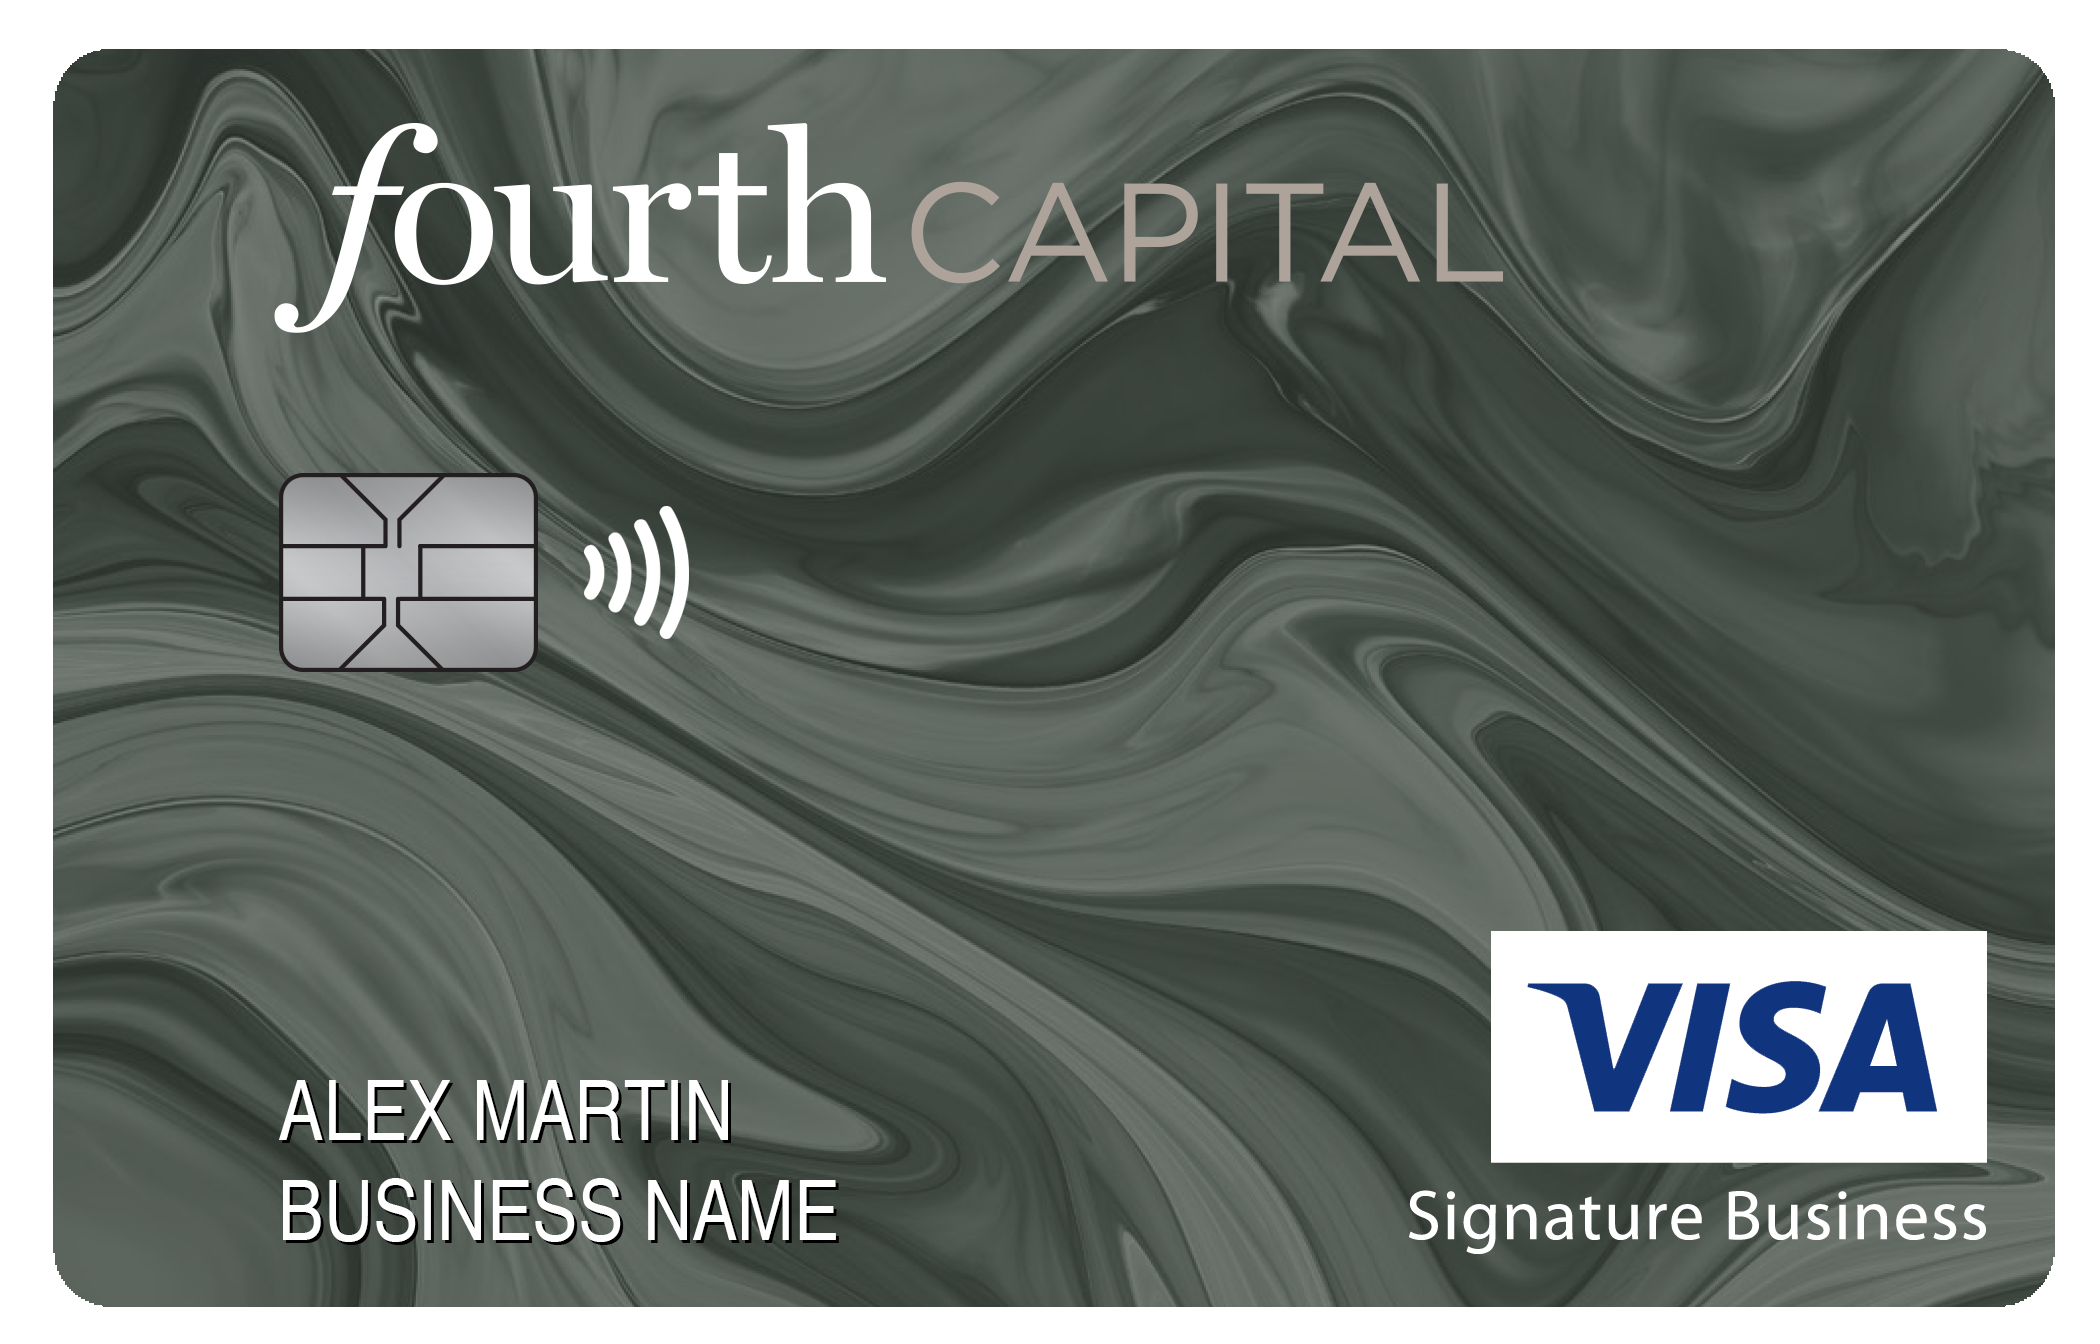 Fourth Capital Smart Business Rewards Card